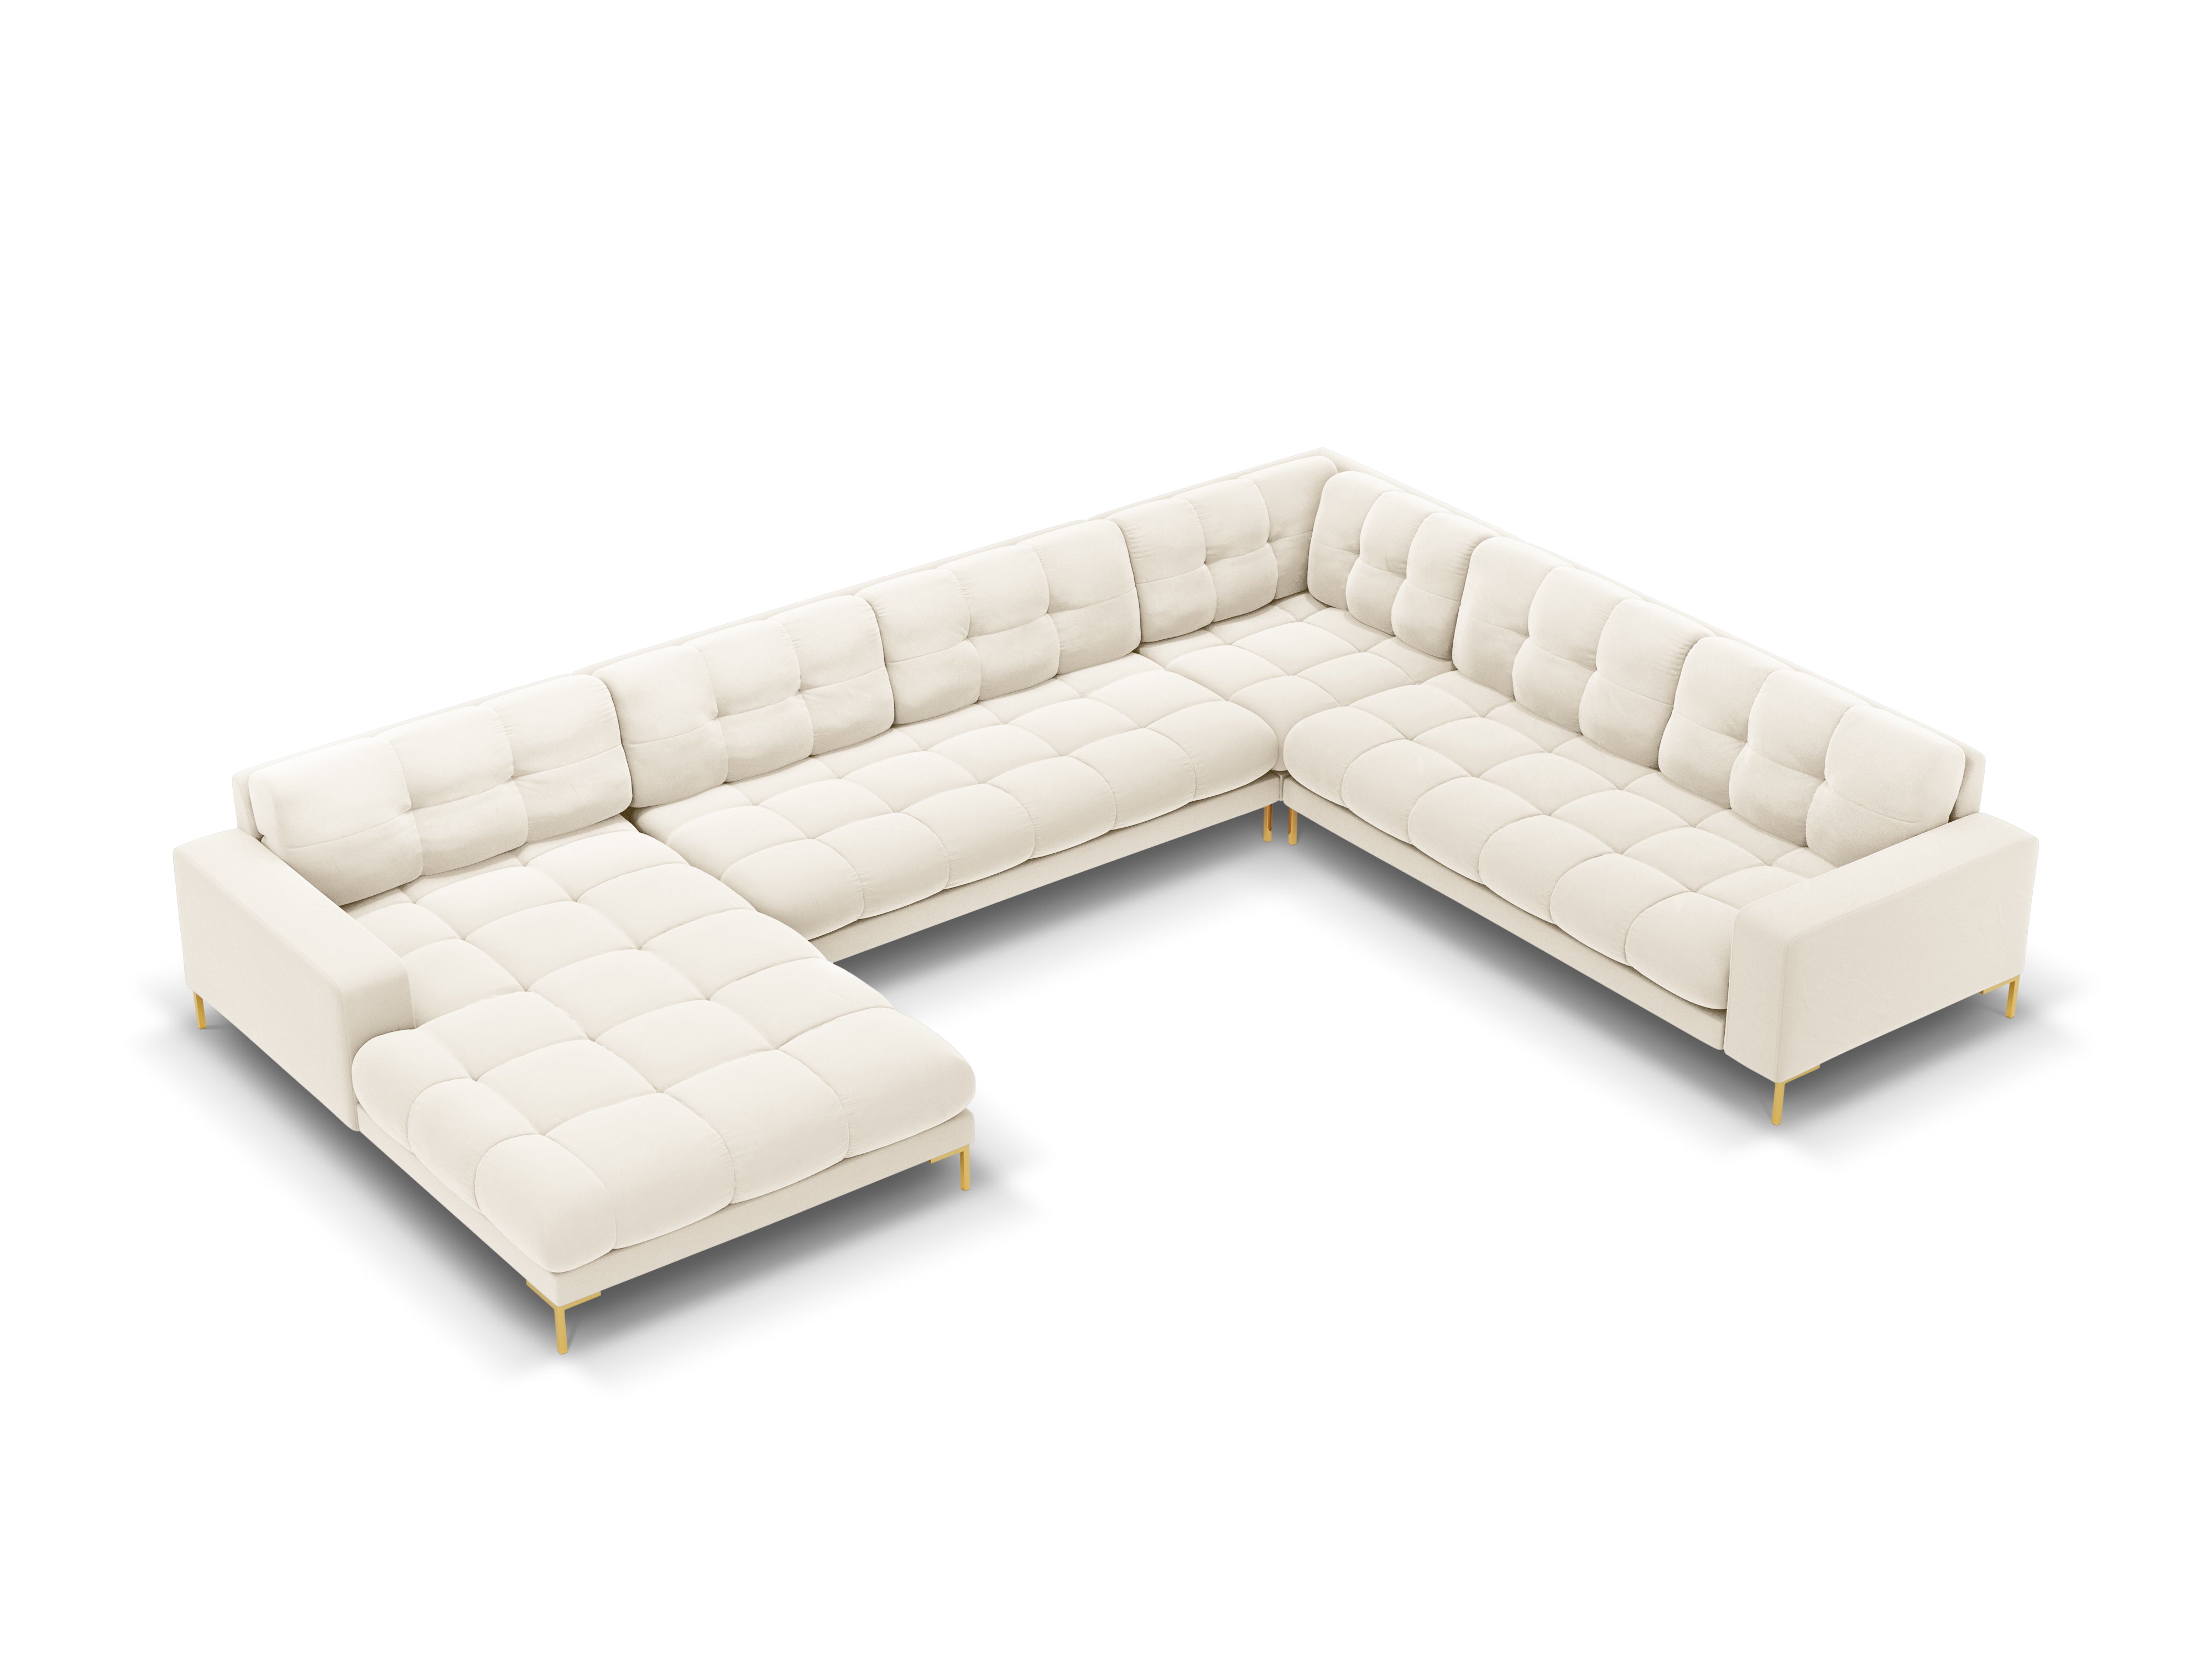 Panoramic velvet sofa right side 7 seater BALI light beige with gold base